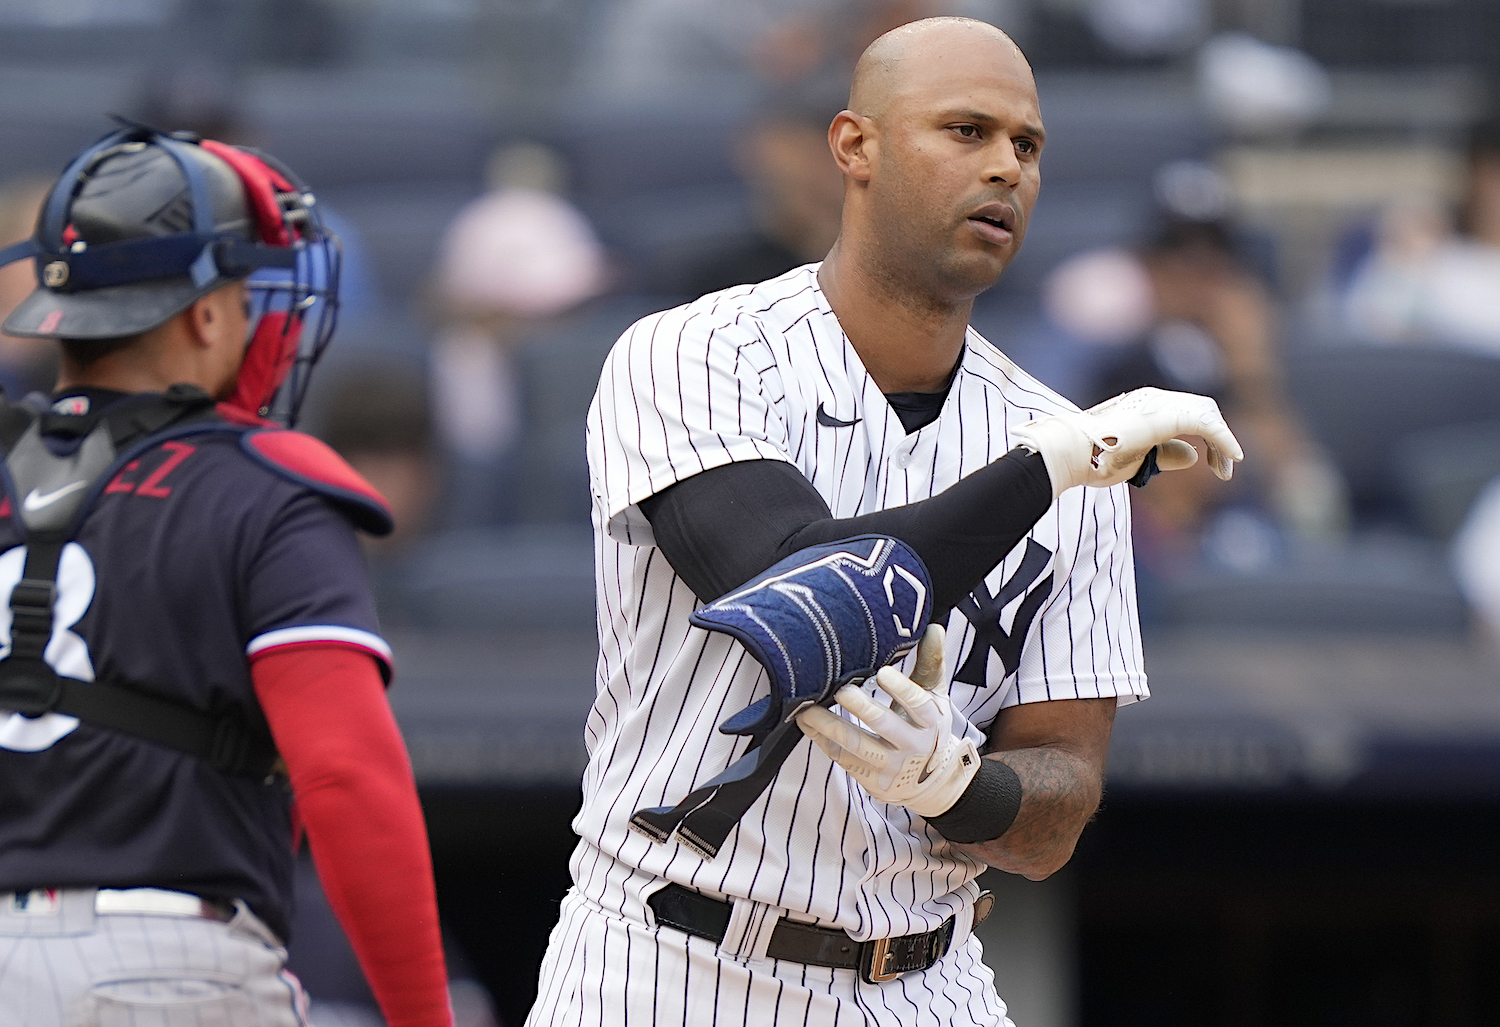 New York Yankees cut struggling OF Aaron Hicks, Sports